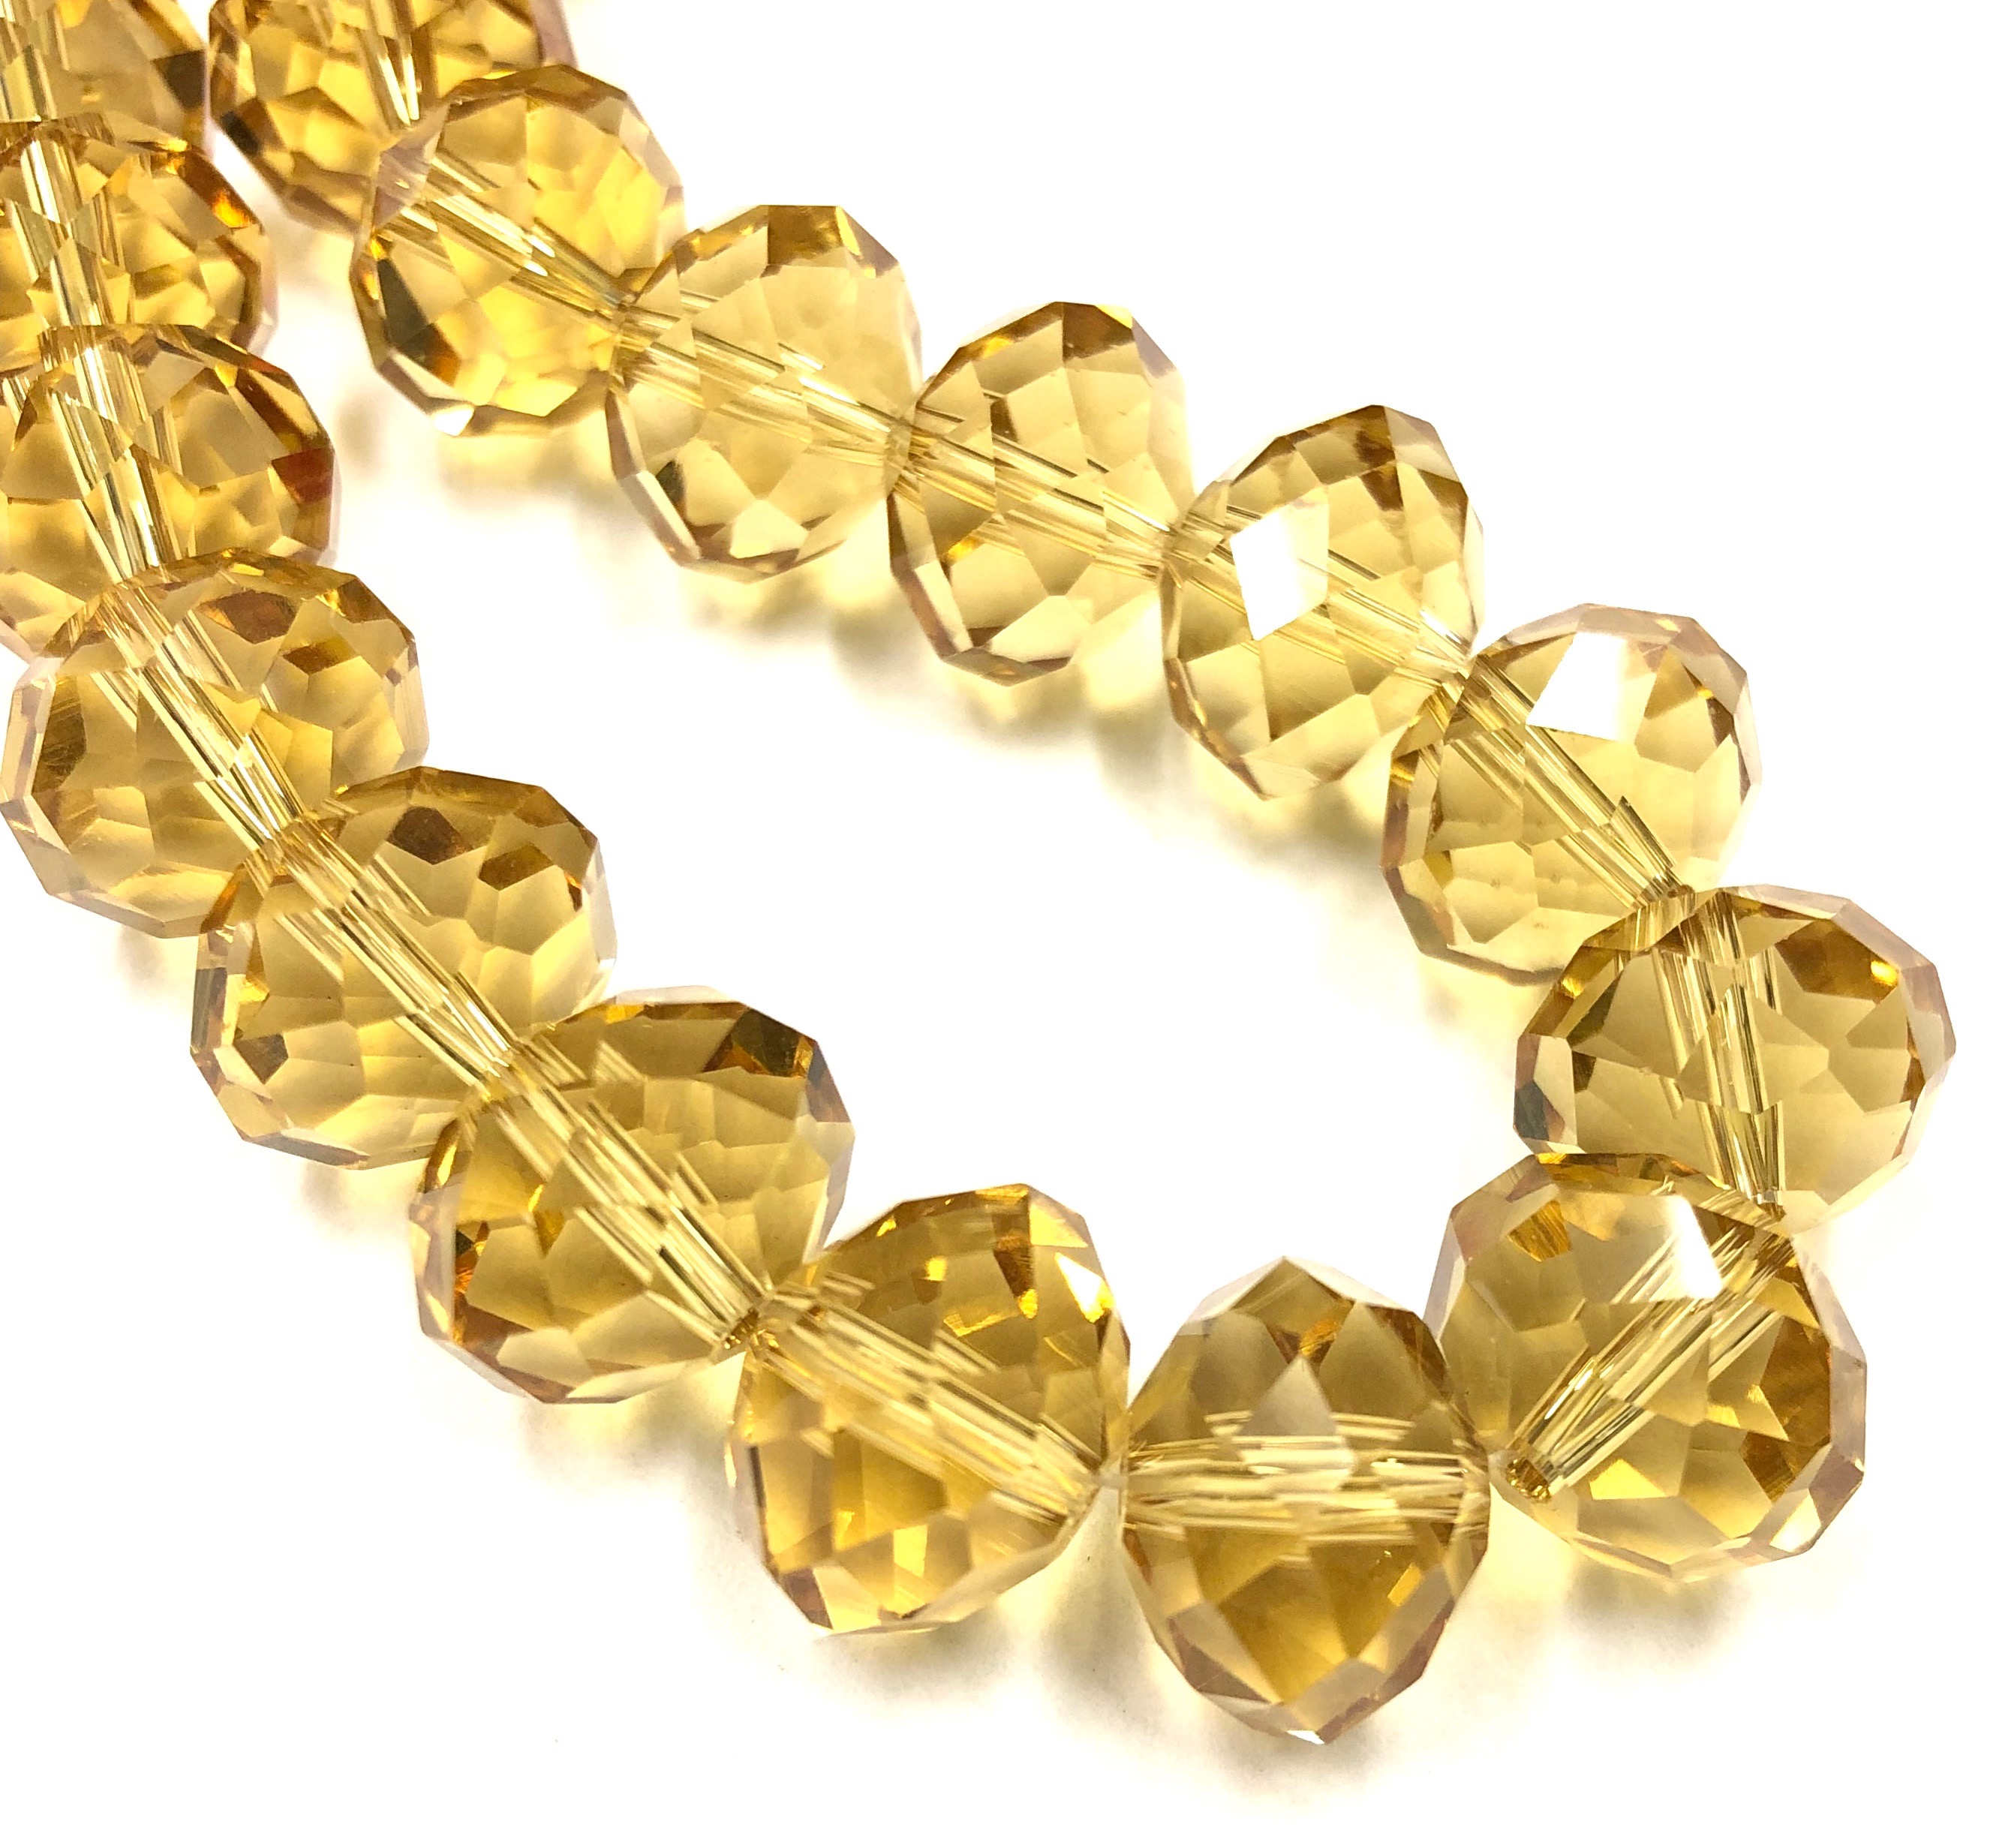 15mm x 10mm Faceted Crystal Rondelle - Champagne Gold - Deborah Beads